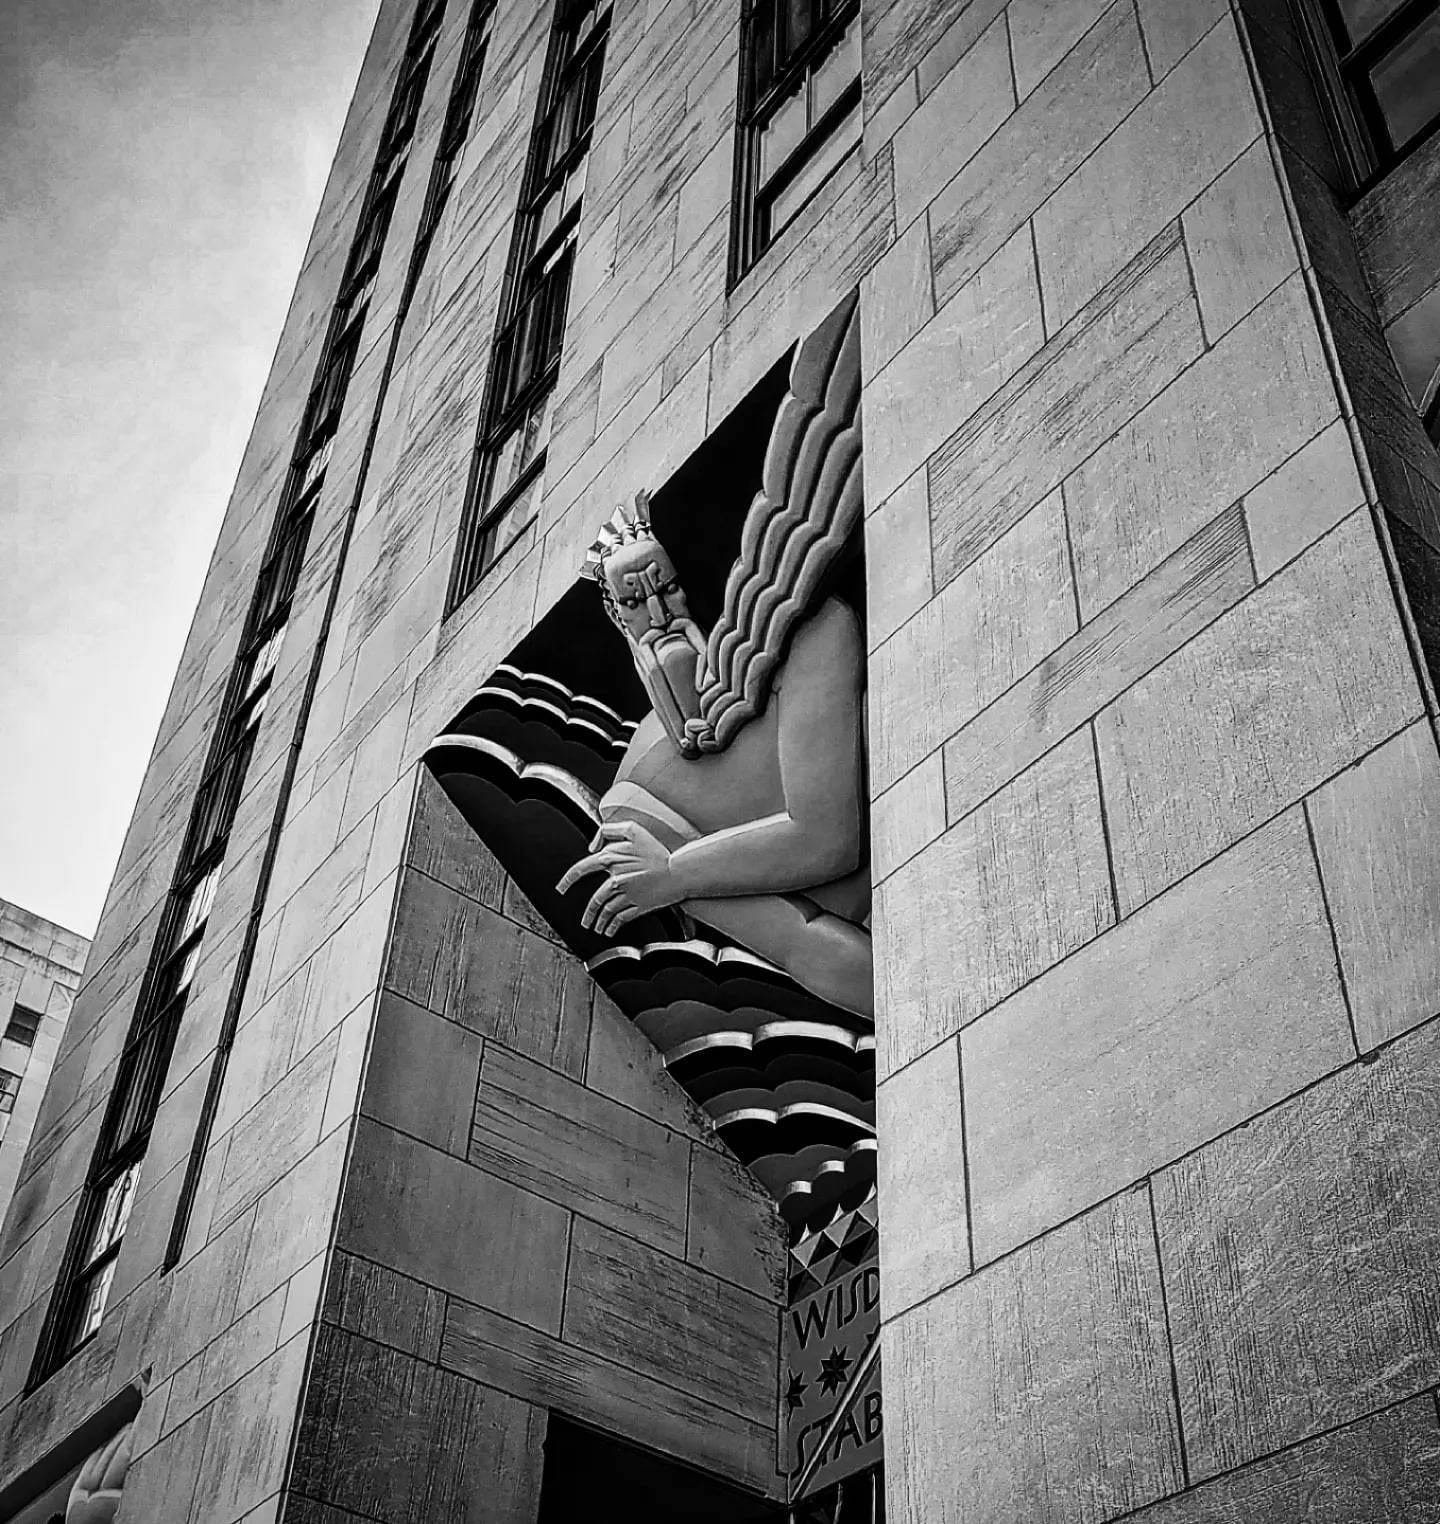 Rockefeller Center Wisdom Statue- NYC- image by Shawn R. Metivier, 2022